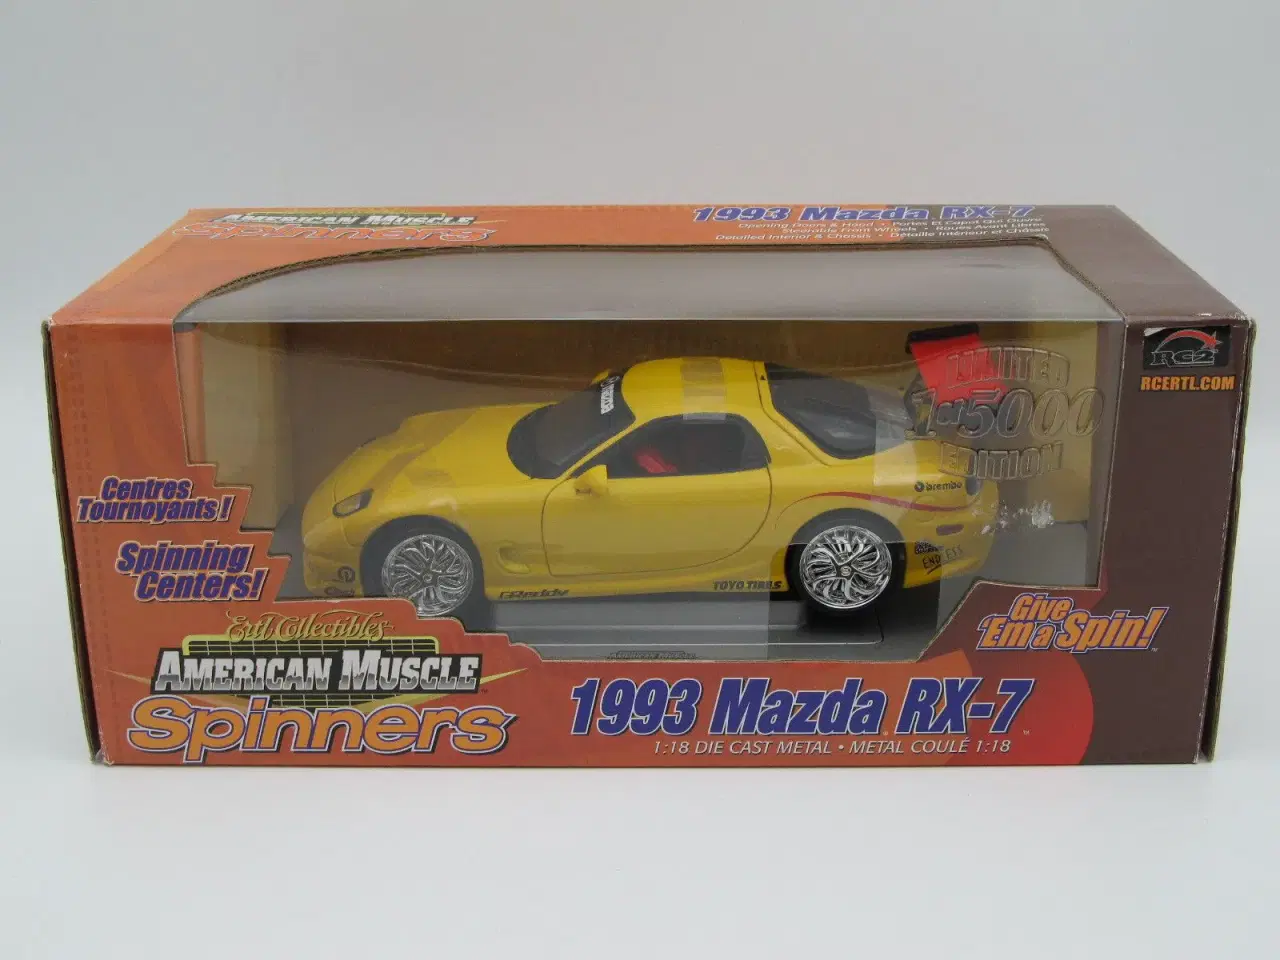 Billede 1 - 1993 Mazda RX-7 Spinners - 1:18